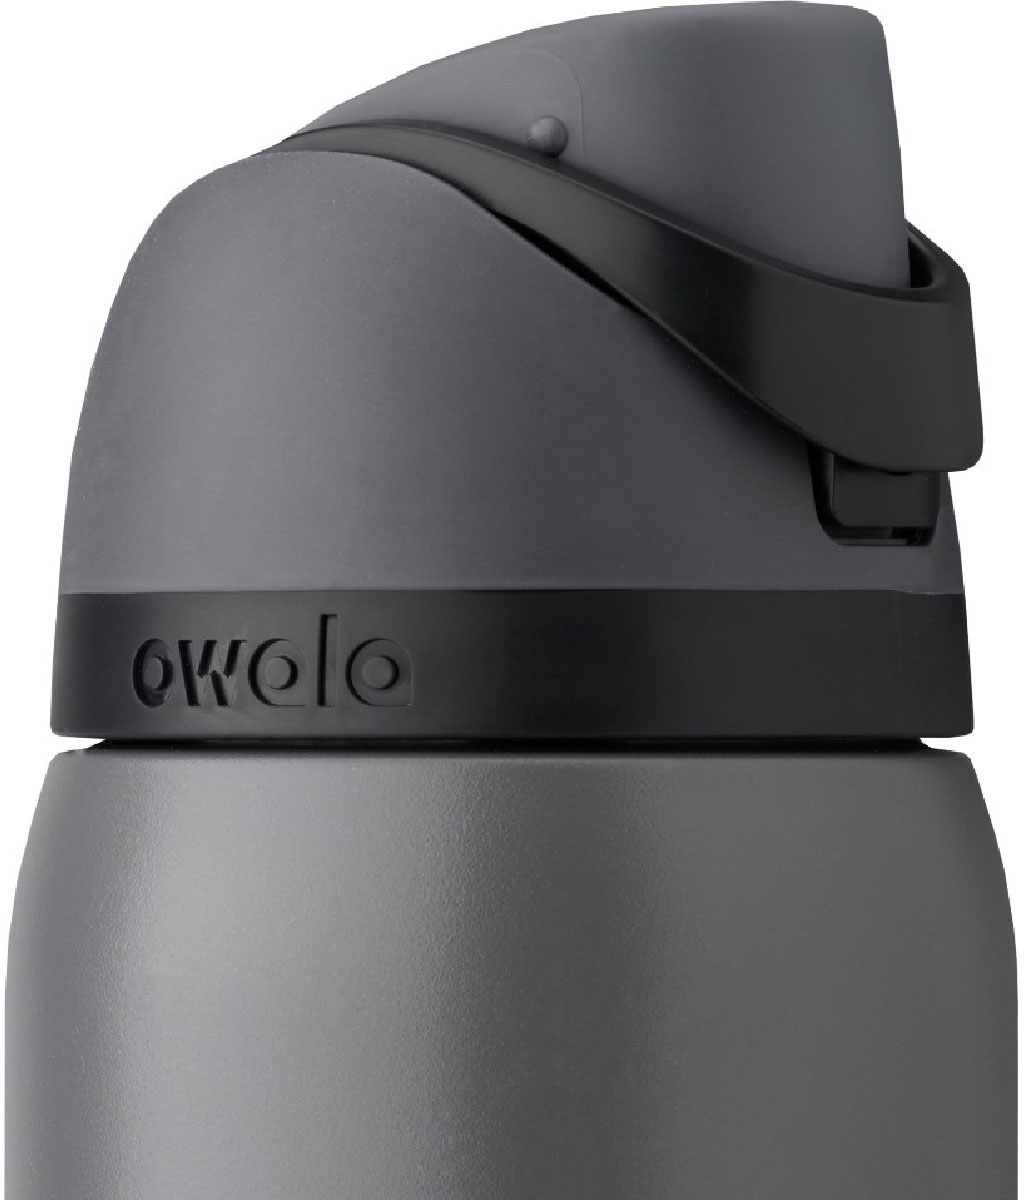 Owala FreeSip Voodoo Purple Stainless Steel Water Bottle 40 Fl Oz